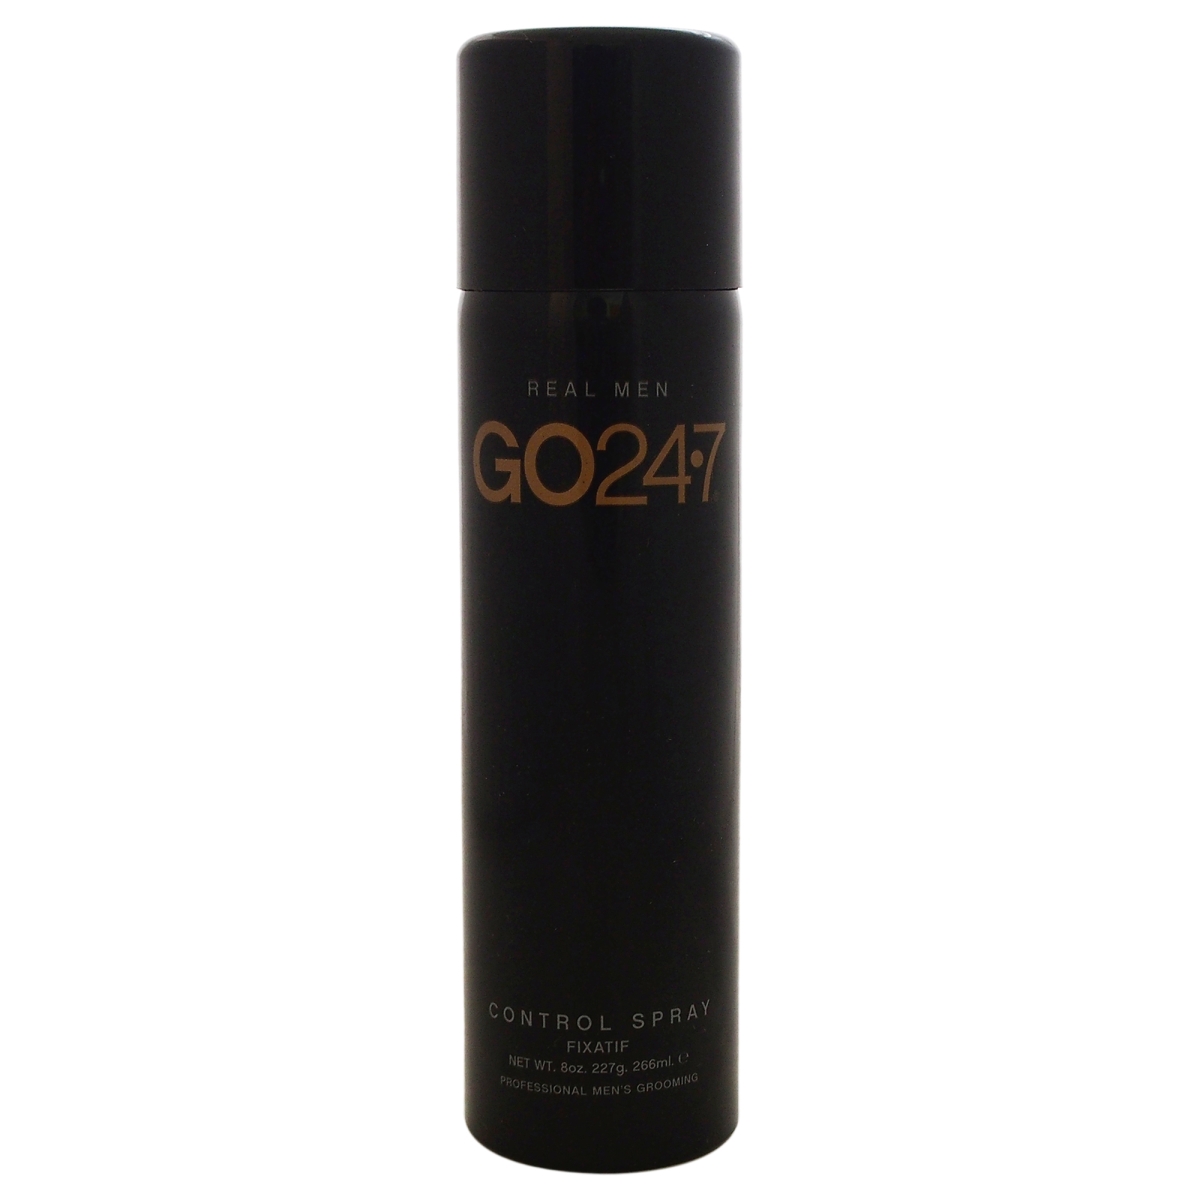 M-hc-1274 8 Oz Real Men Control Hair Spray For Men